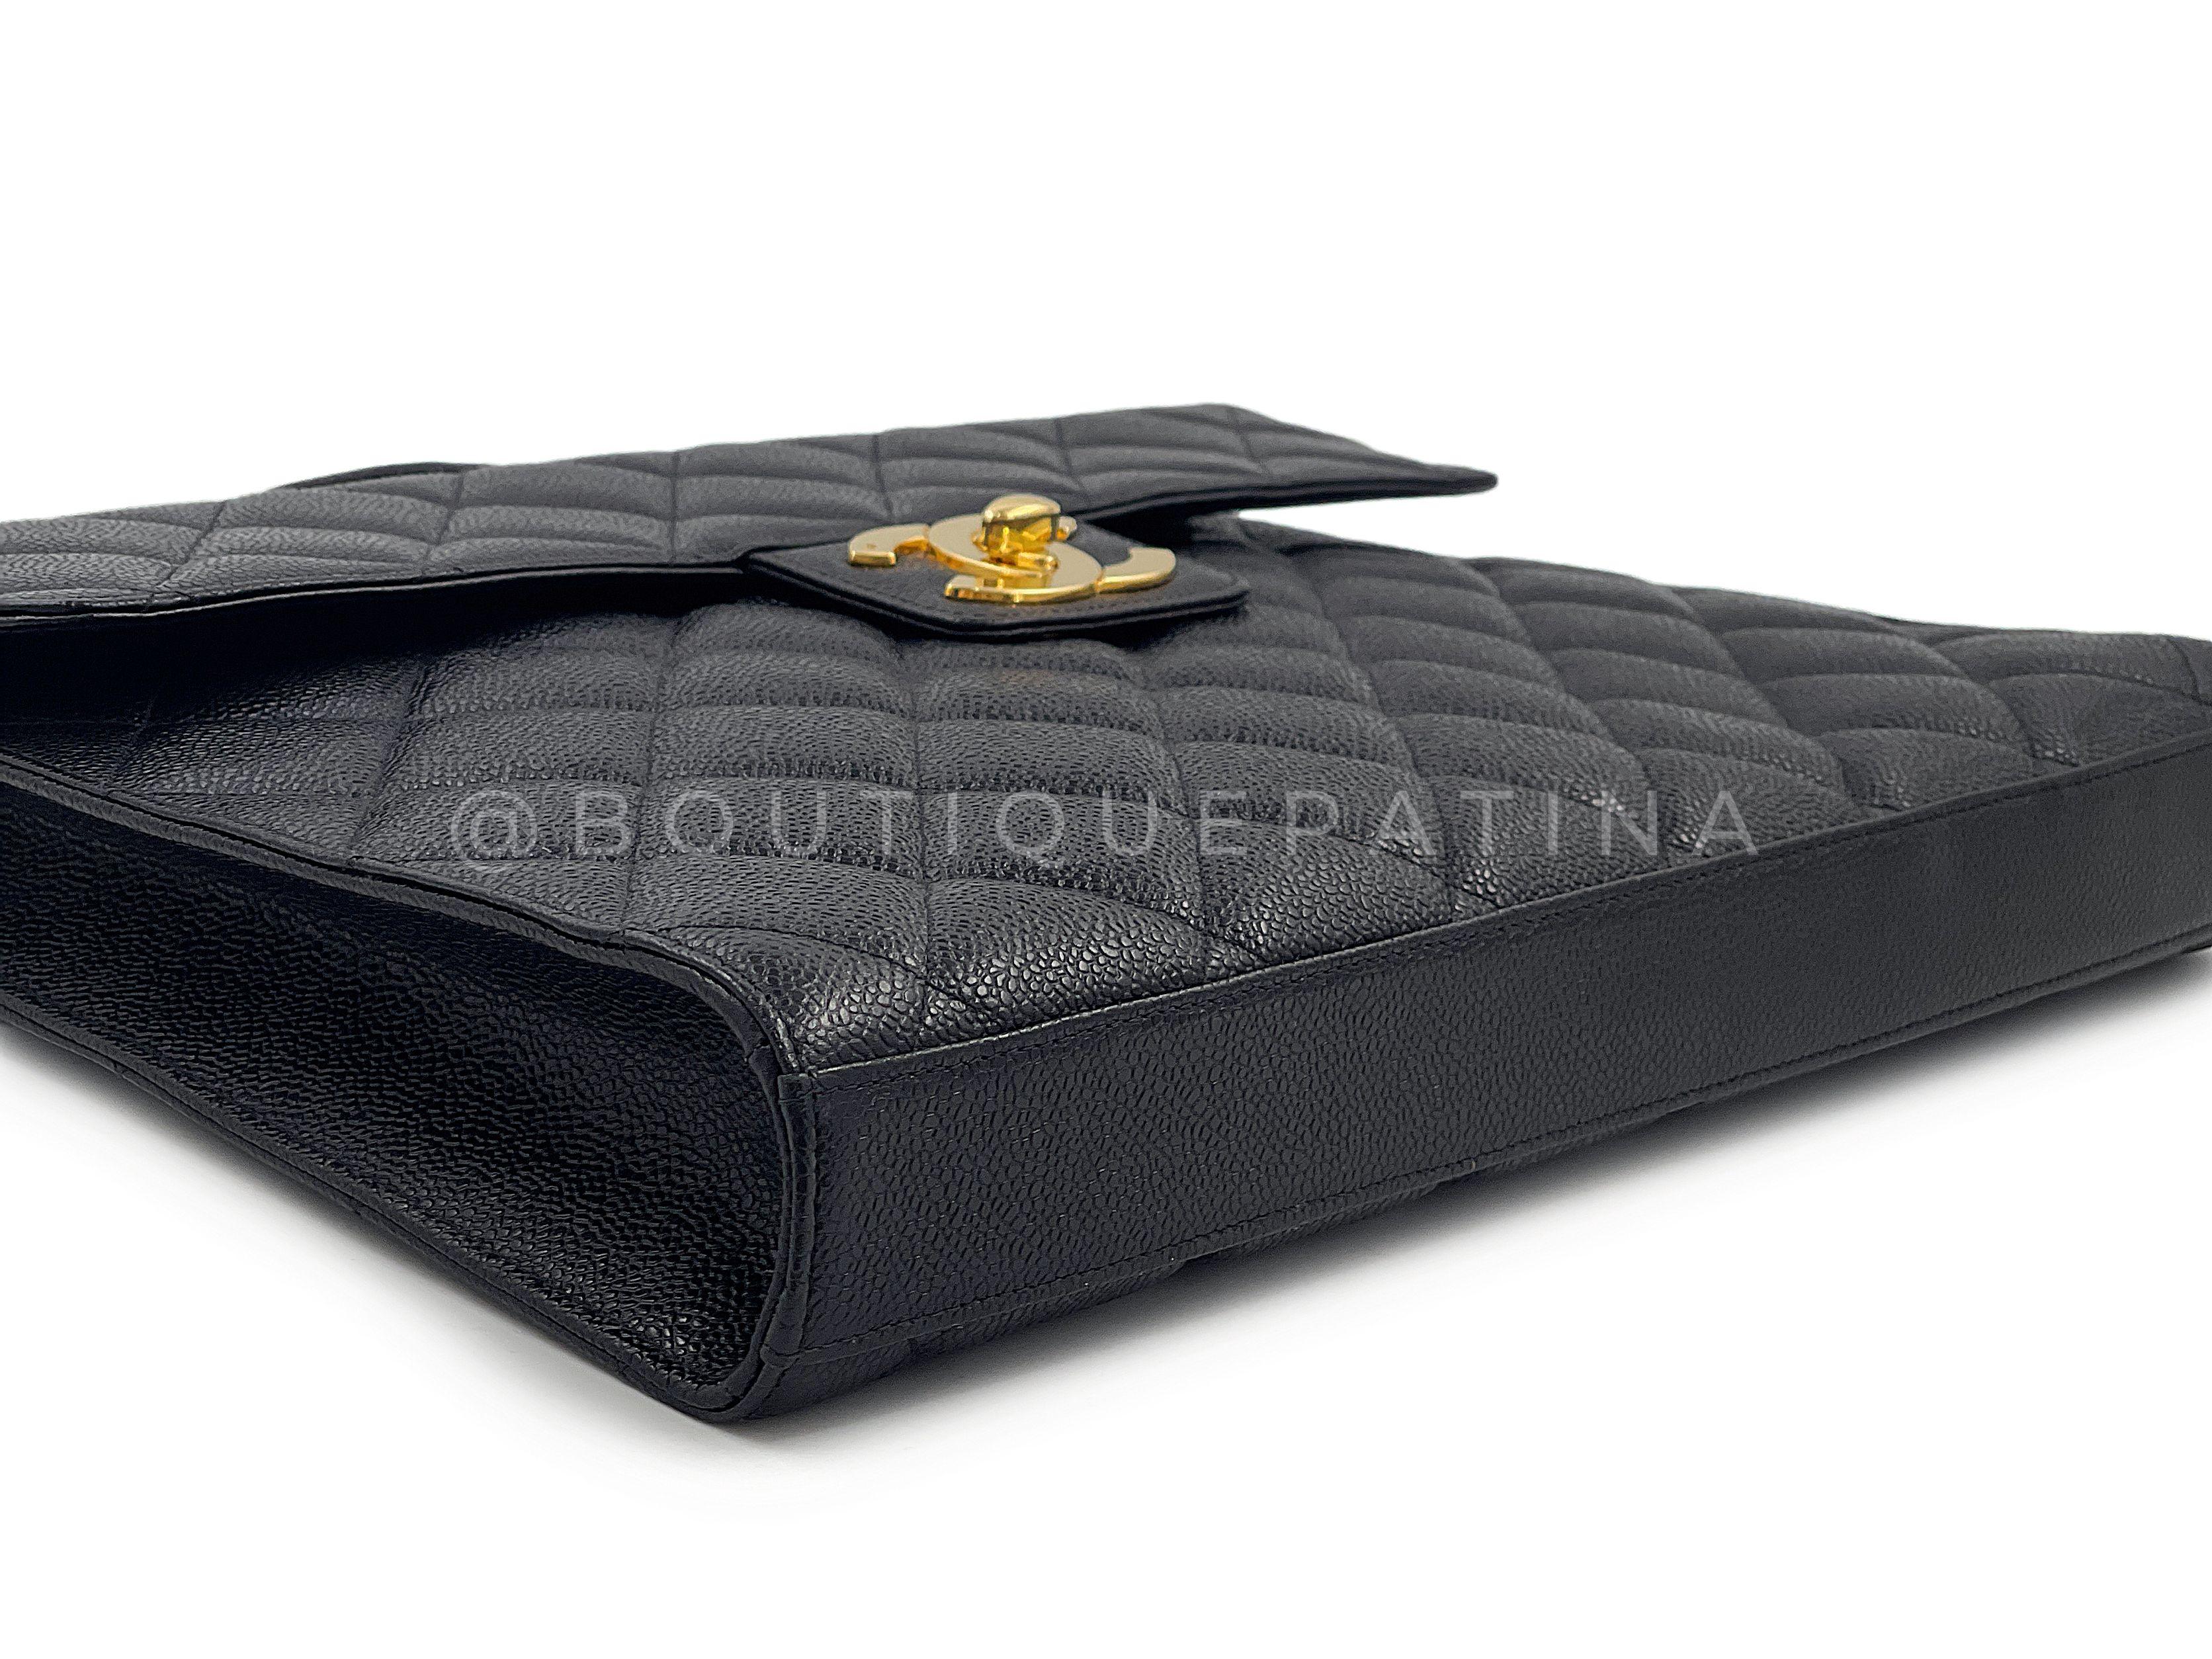 Chanel 1995 Vintage Black Caviar Briefcase Tote Bag 24k GHW 67916 For Sale 3